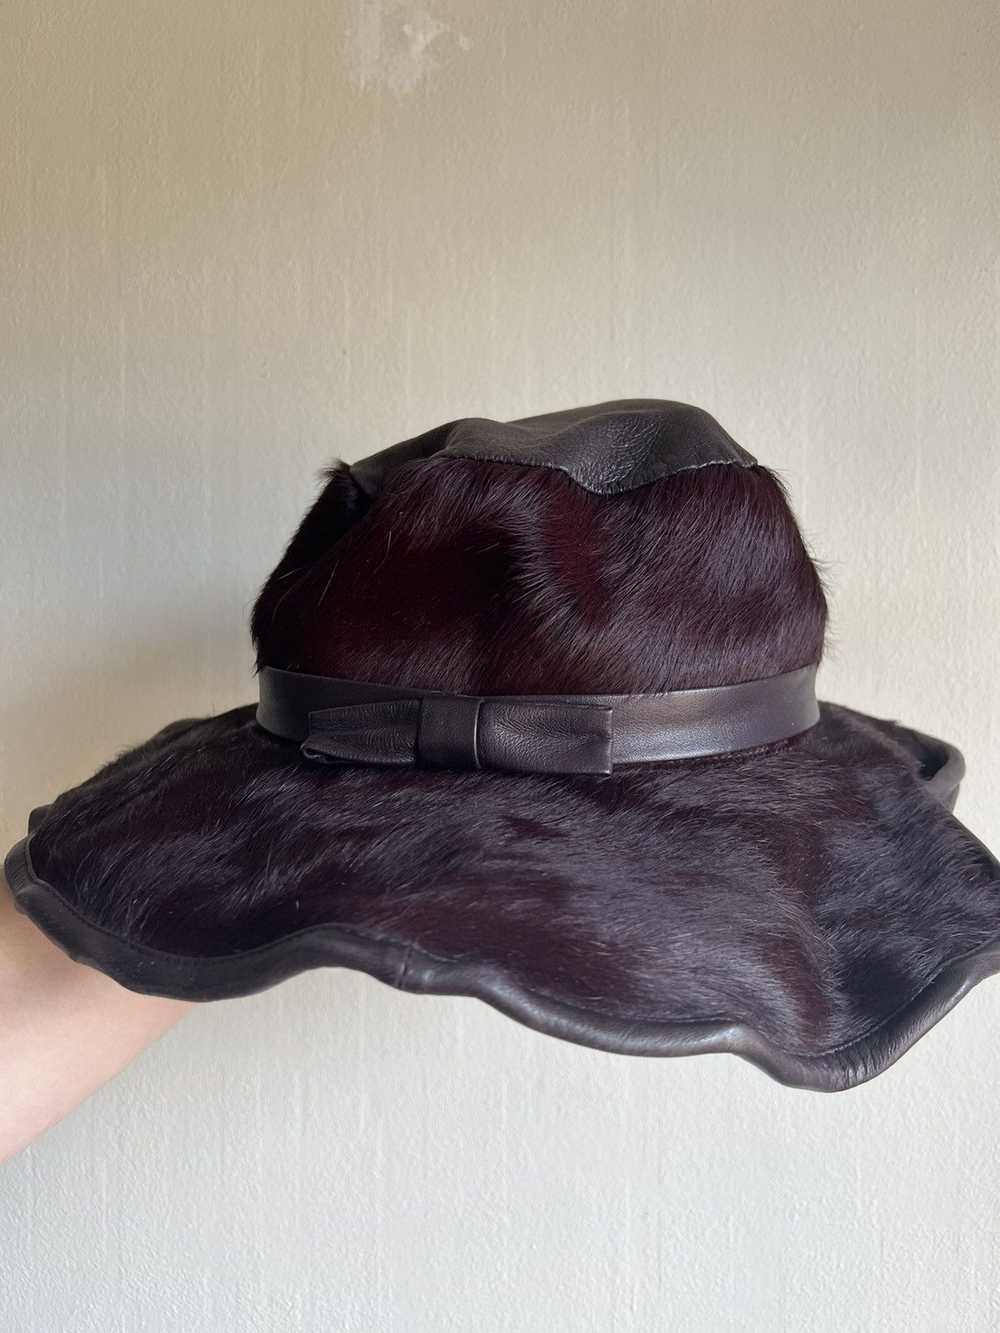 Acne Studios Acne Studios Brown Leather & Fur Hat - image 2